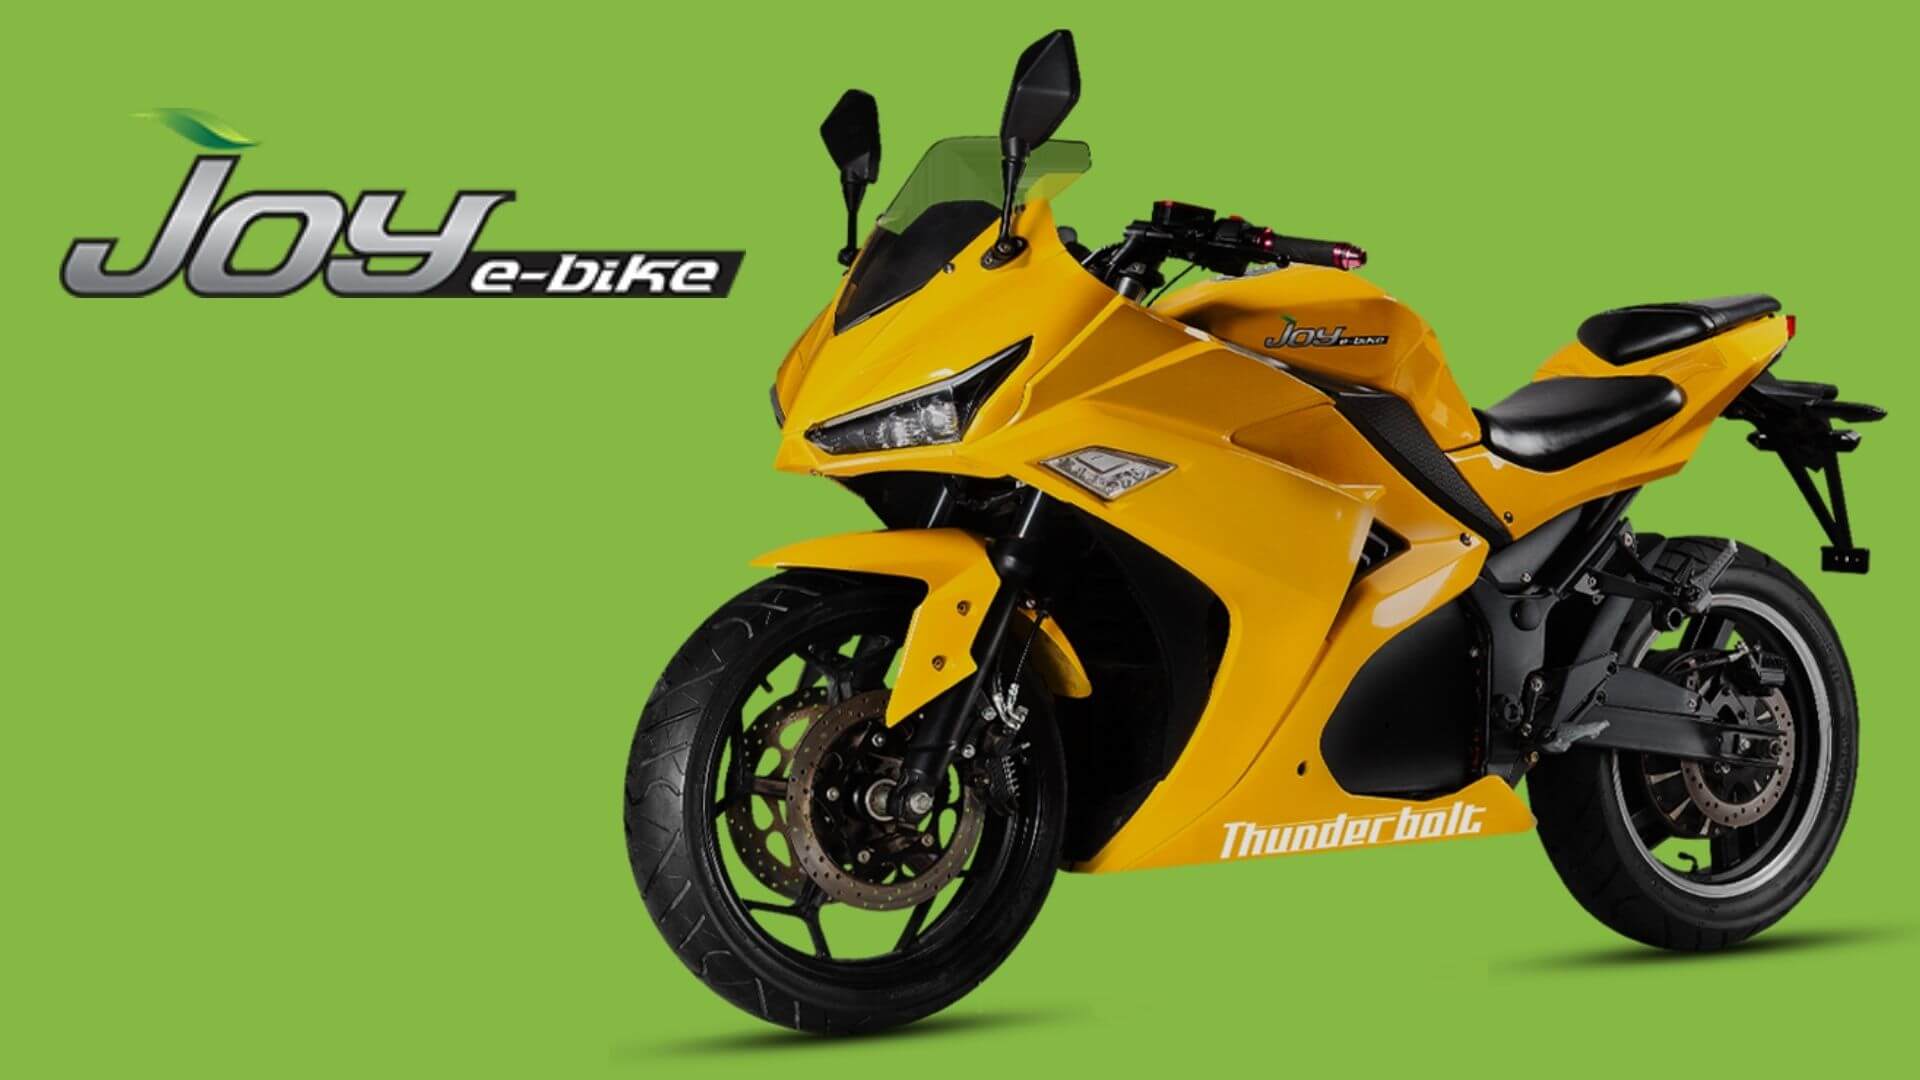 https://e-vehicleinfo.com/joy-electric-bike-thunderbolt-price-range-and-top-speed/